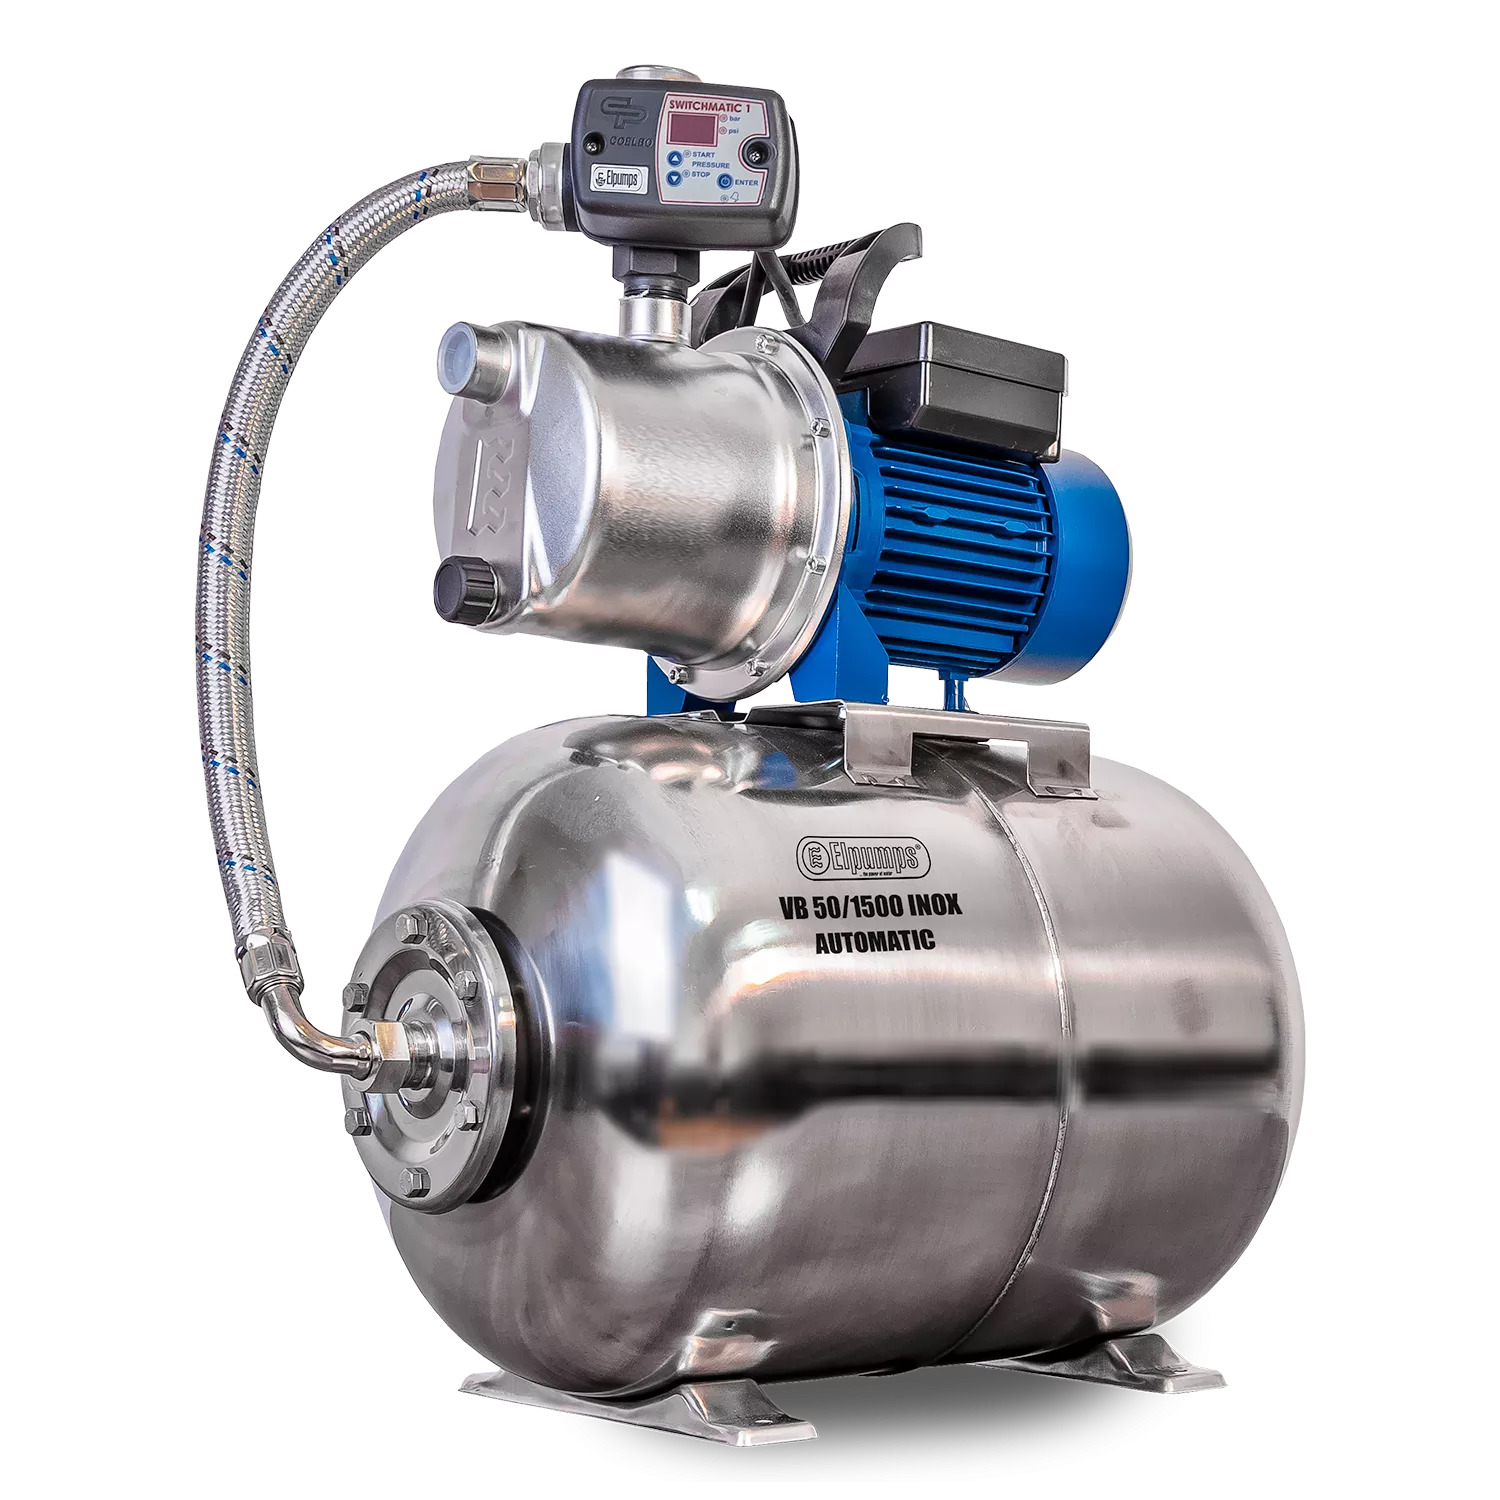 VB 50/1500 INOX Automatic Domestic Waterworks